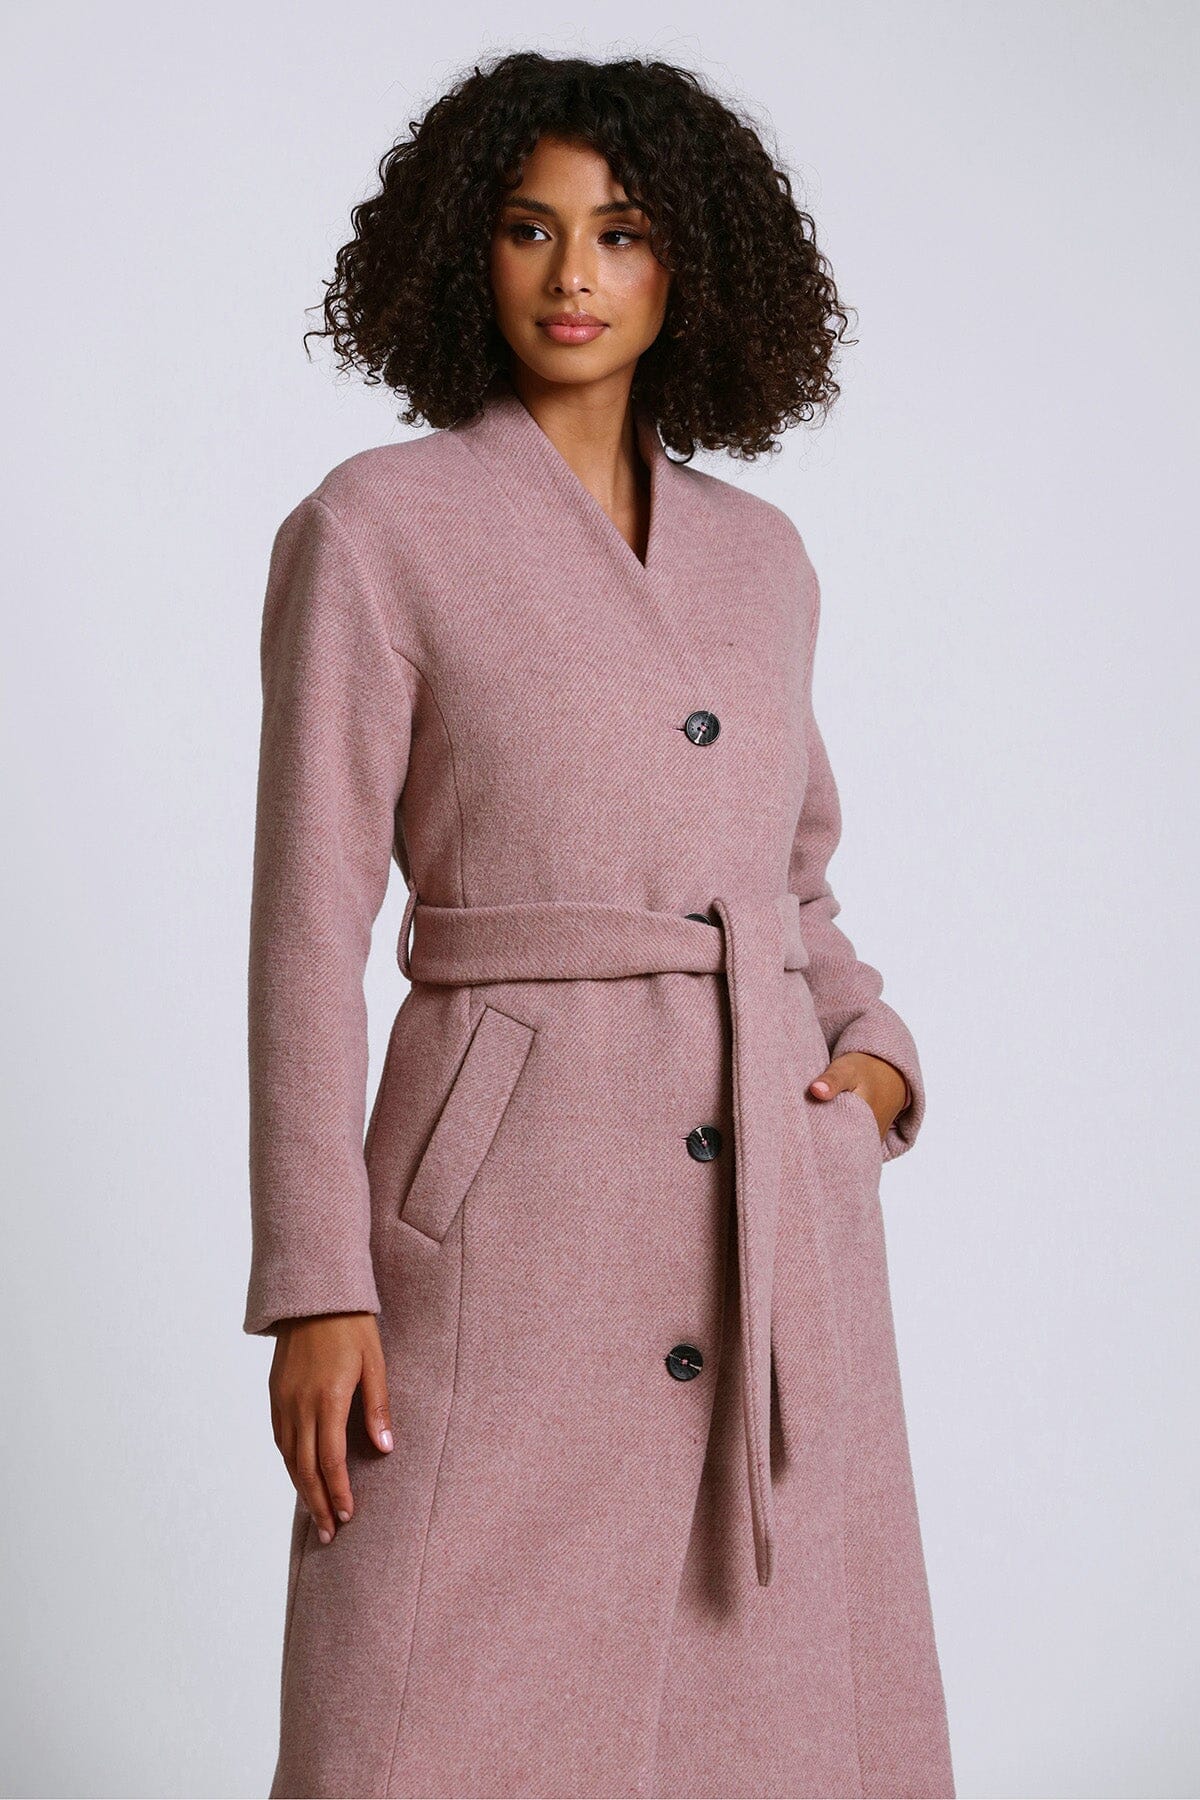 Portabella pink wool blend overlap collar long coat jacket - 